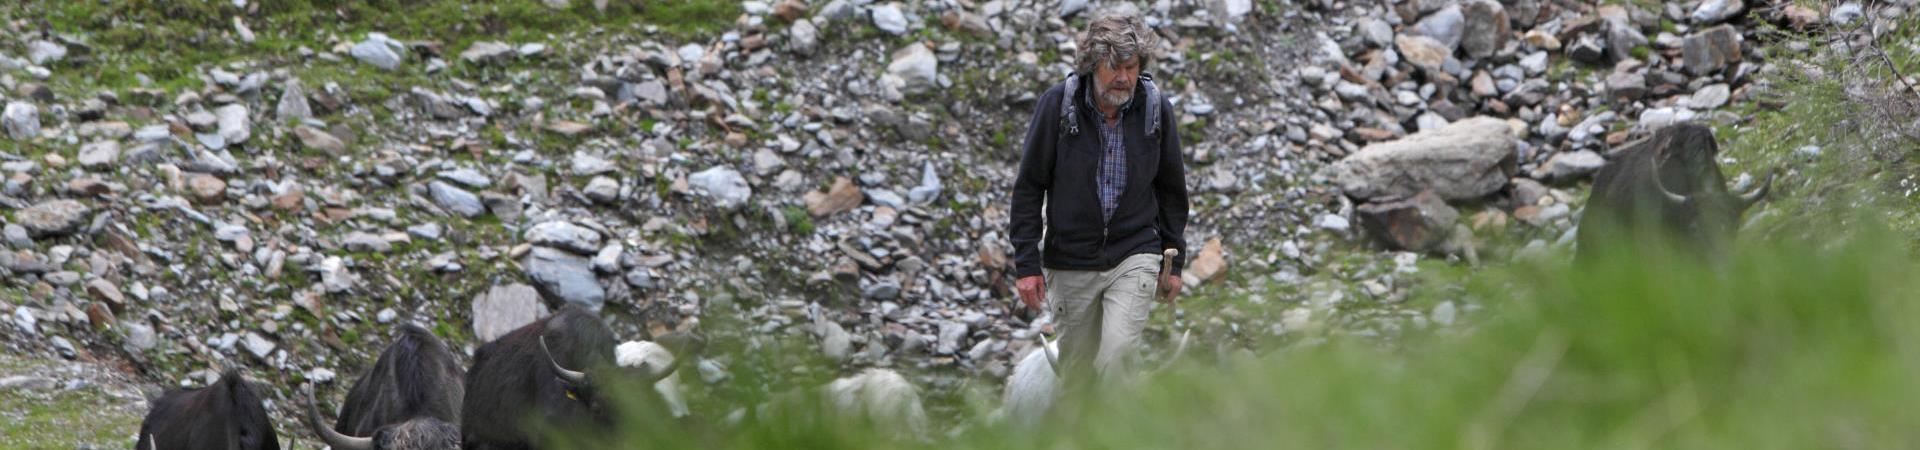 Reinhold Messner e i suoi yak